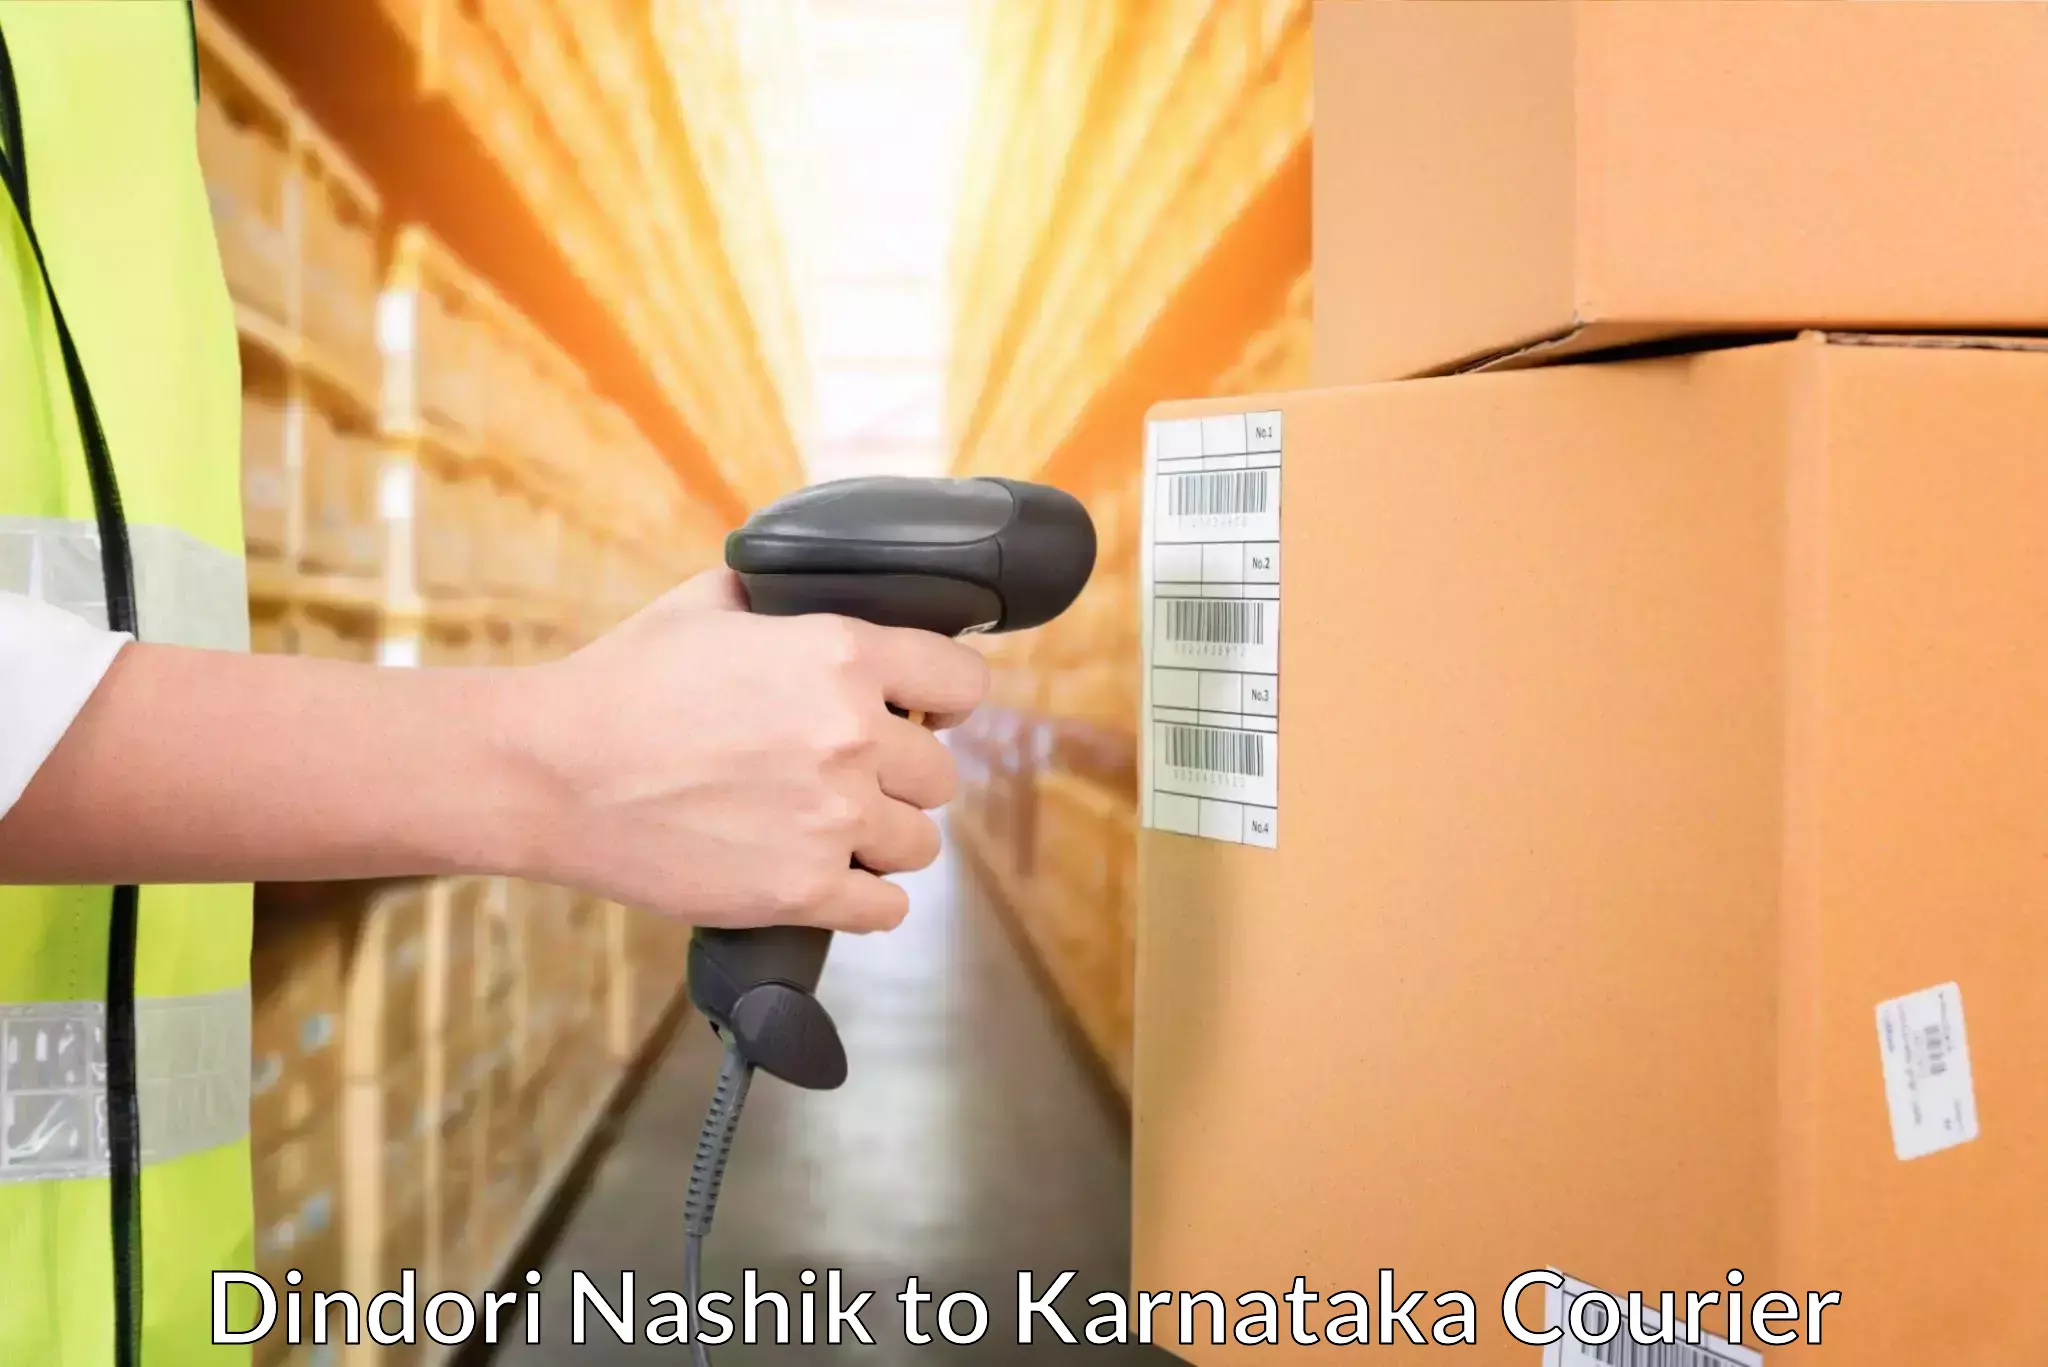 Enhanced tracking features Dindori Nashik to Doddaballapura